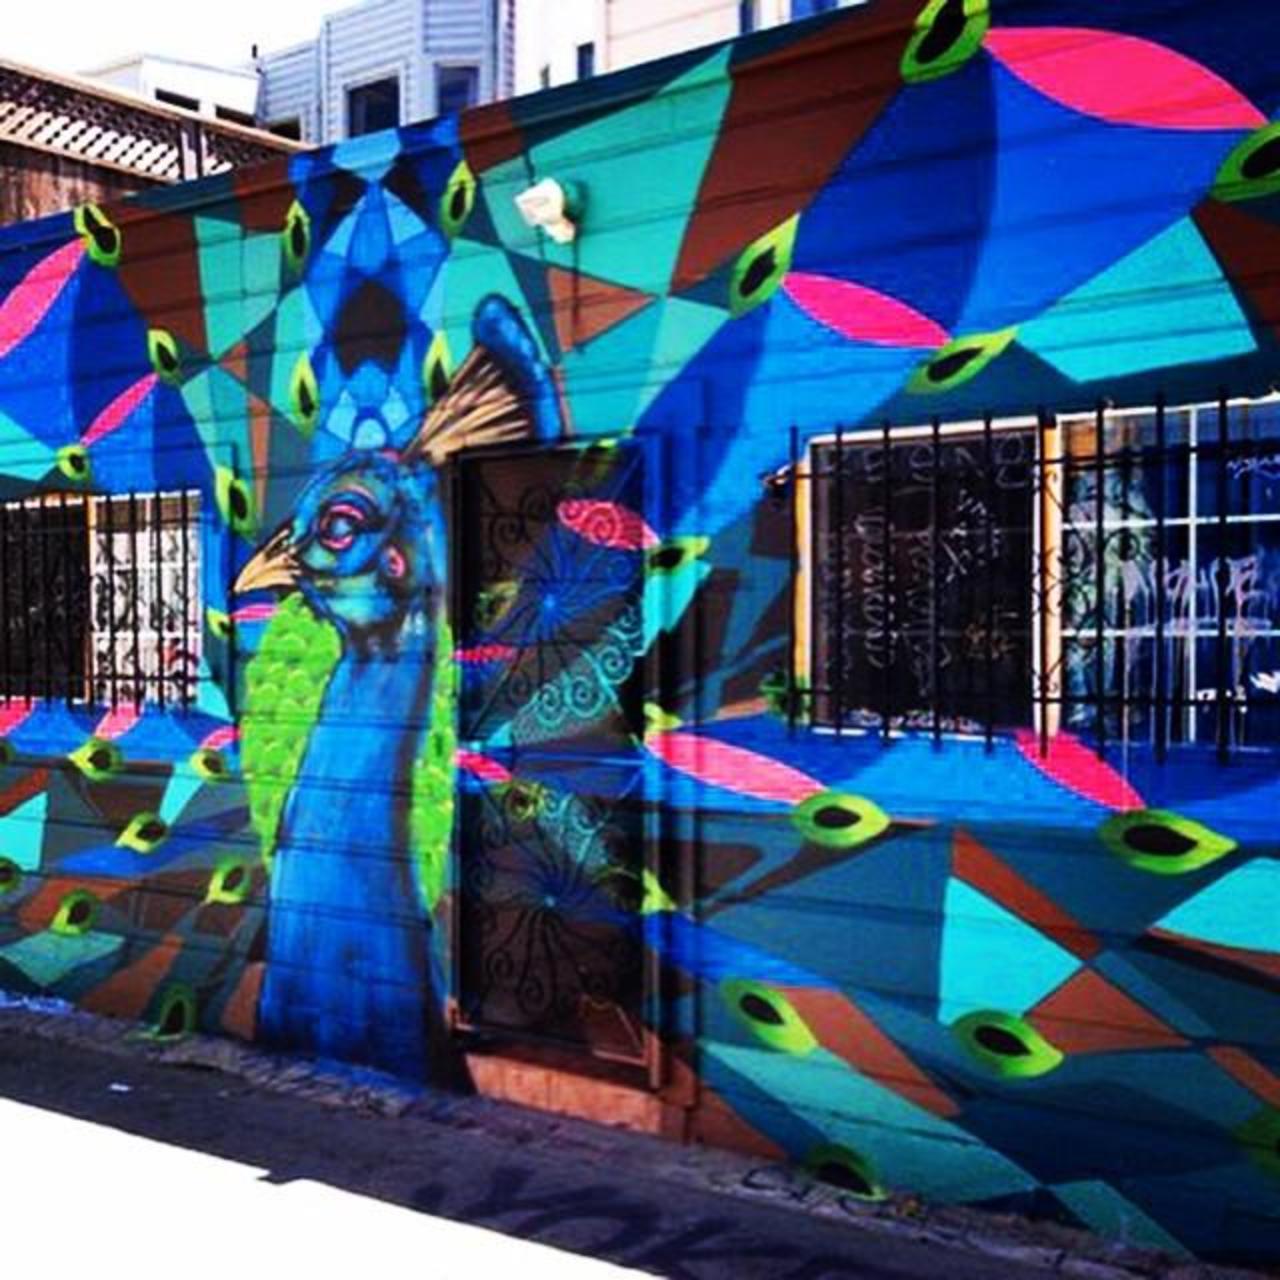 #Mural in #SanFrancisco #publicart #streetart #urbanart #graffiti #instagraffiti #graffitiart #streetartsf #sf #gra… http://t.co/7X2jLTqnLy